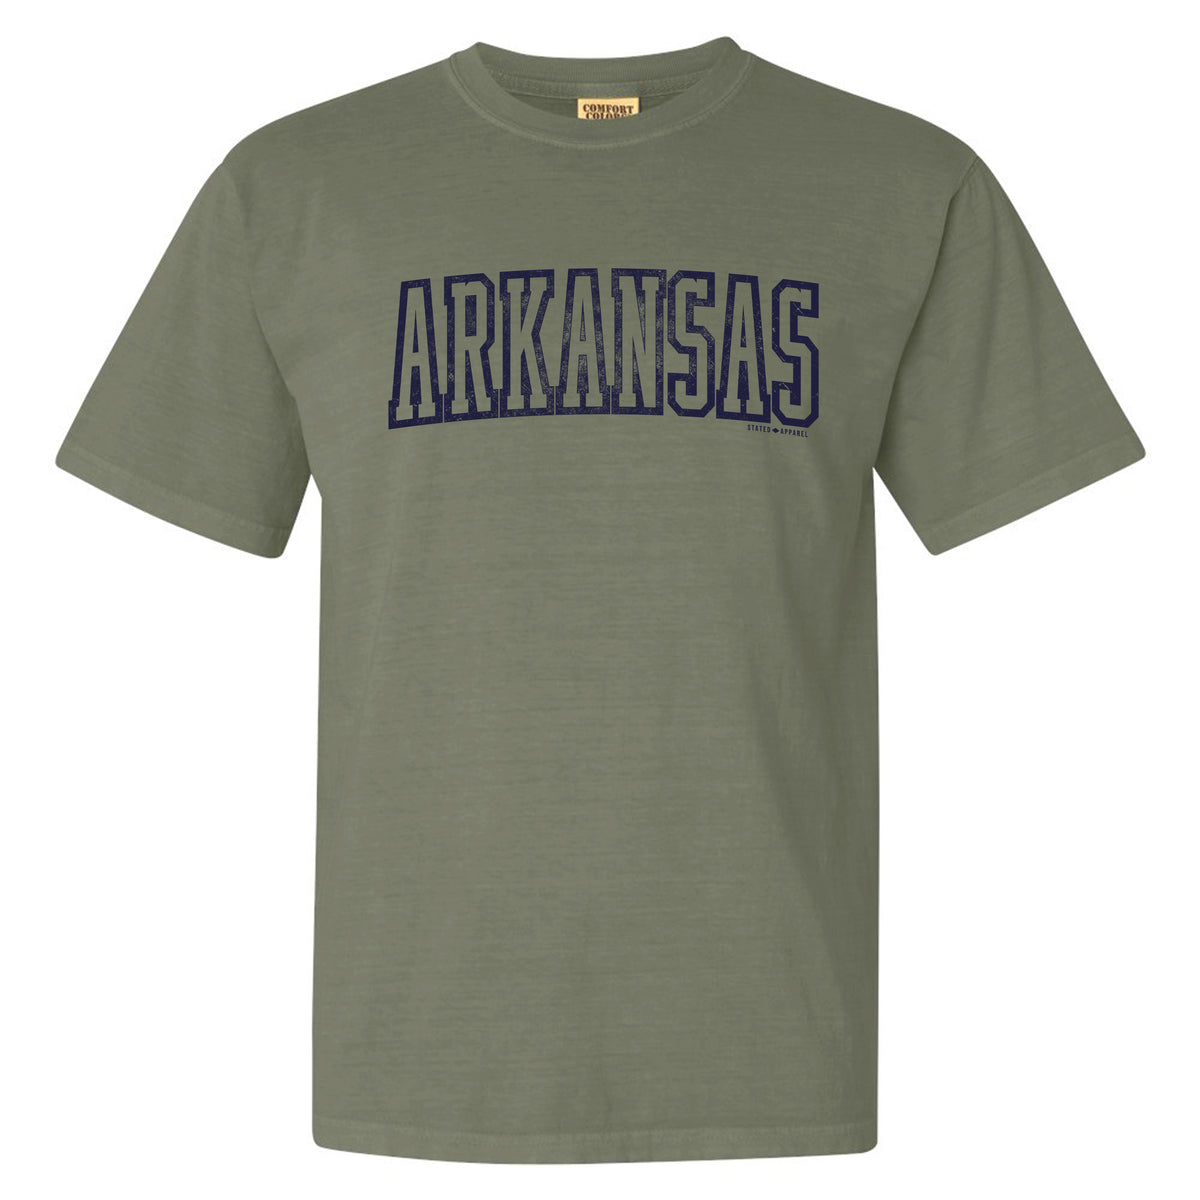 Arkansas Arch Outline T-Shirt